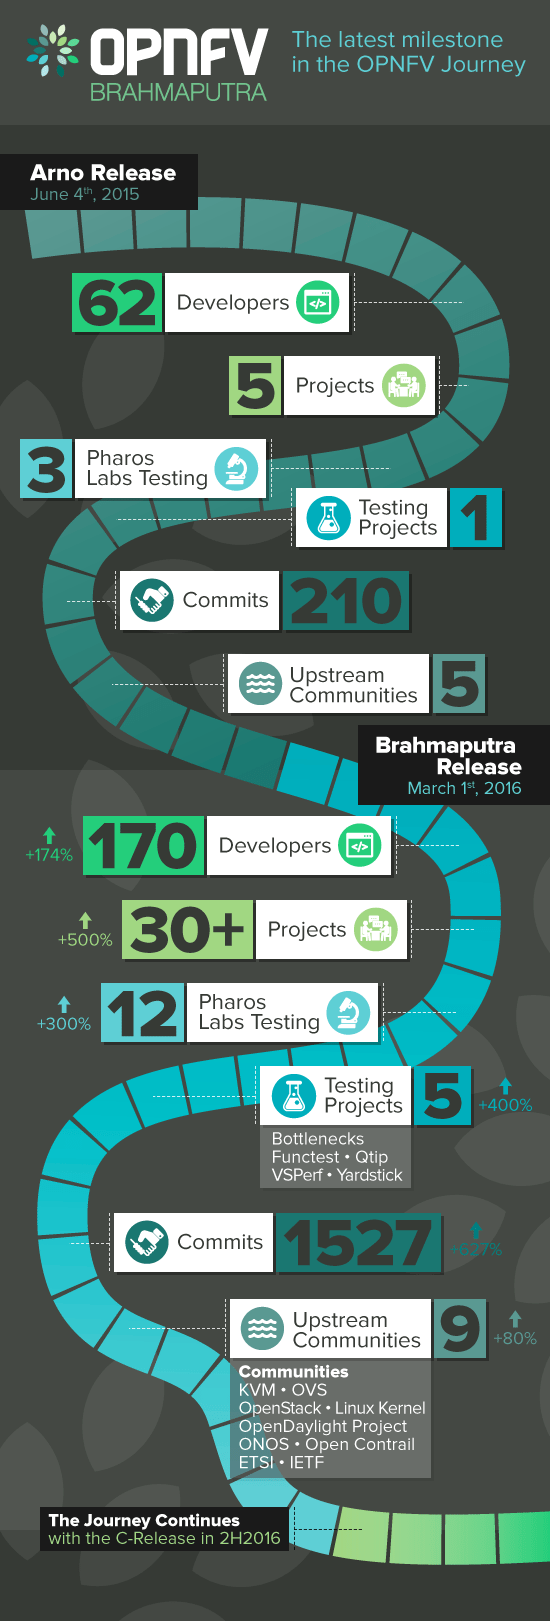 OPNFV_Brahmaputra_Infographic_FINAL (2)